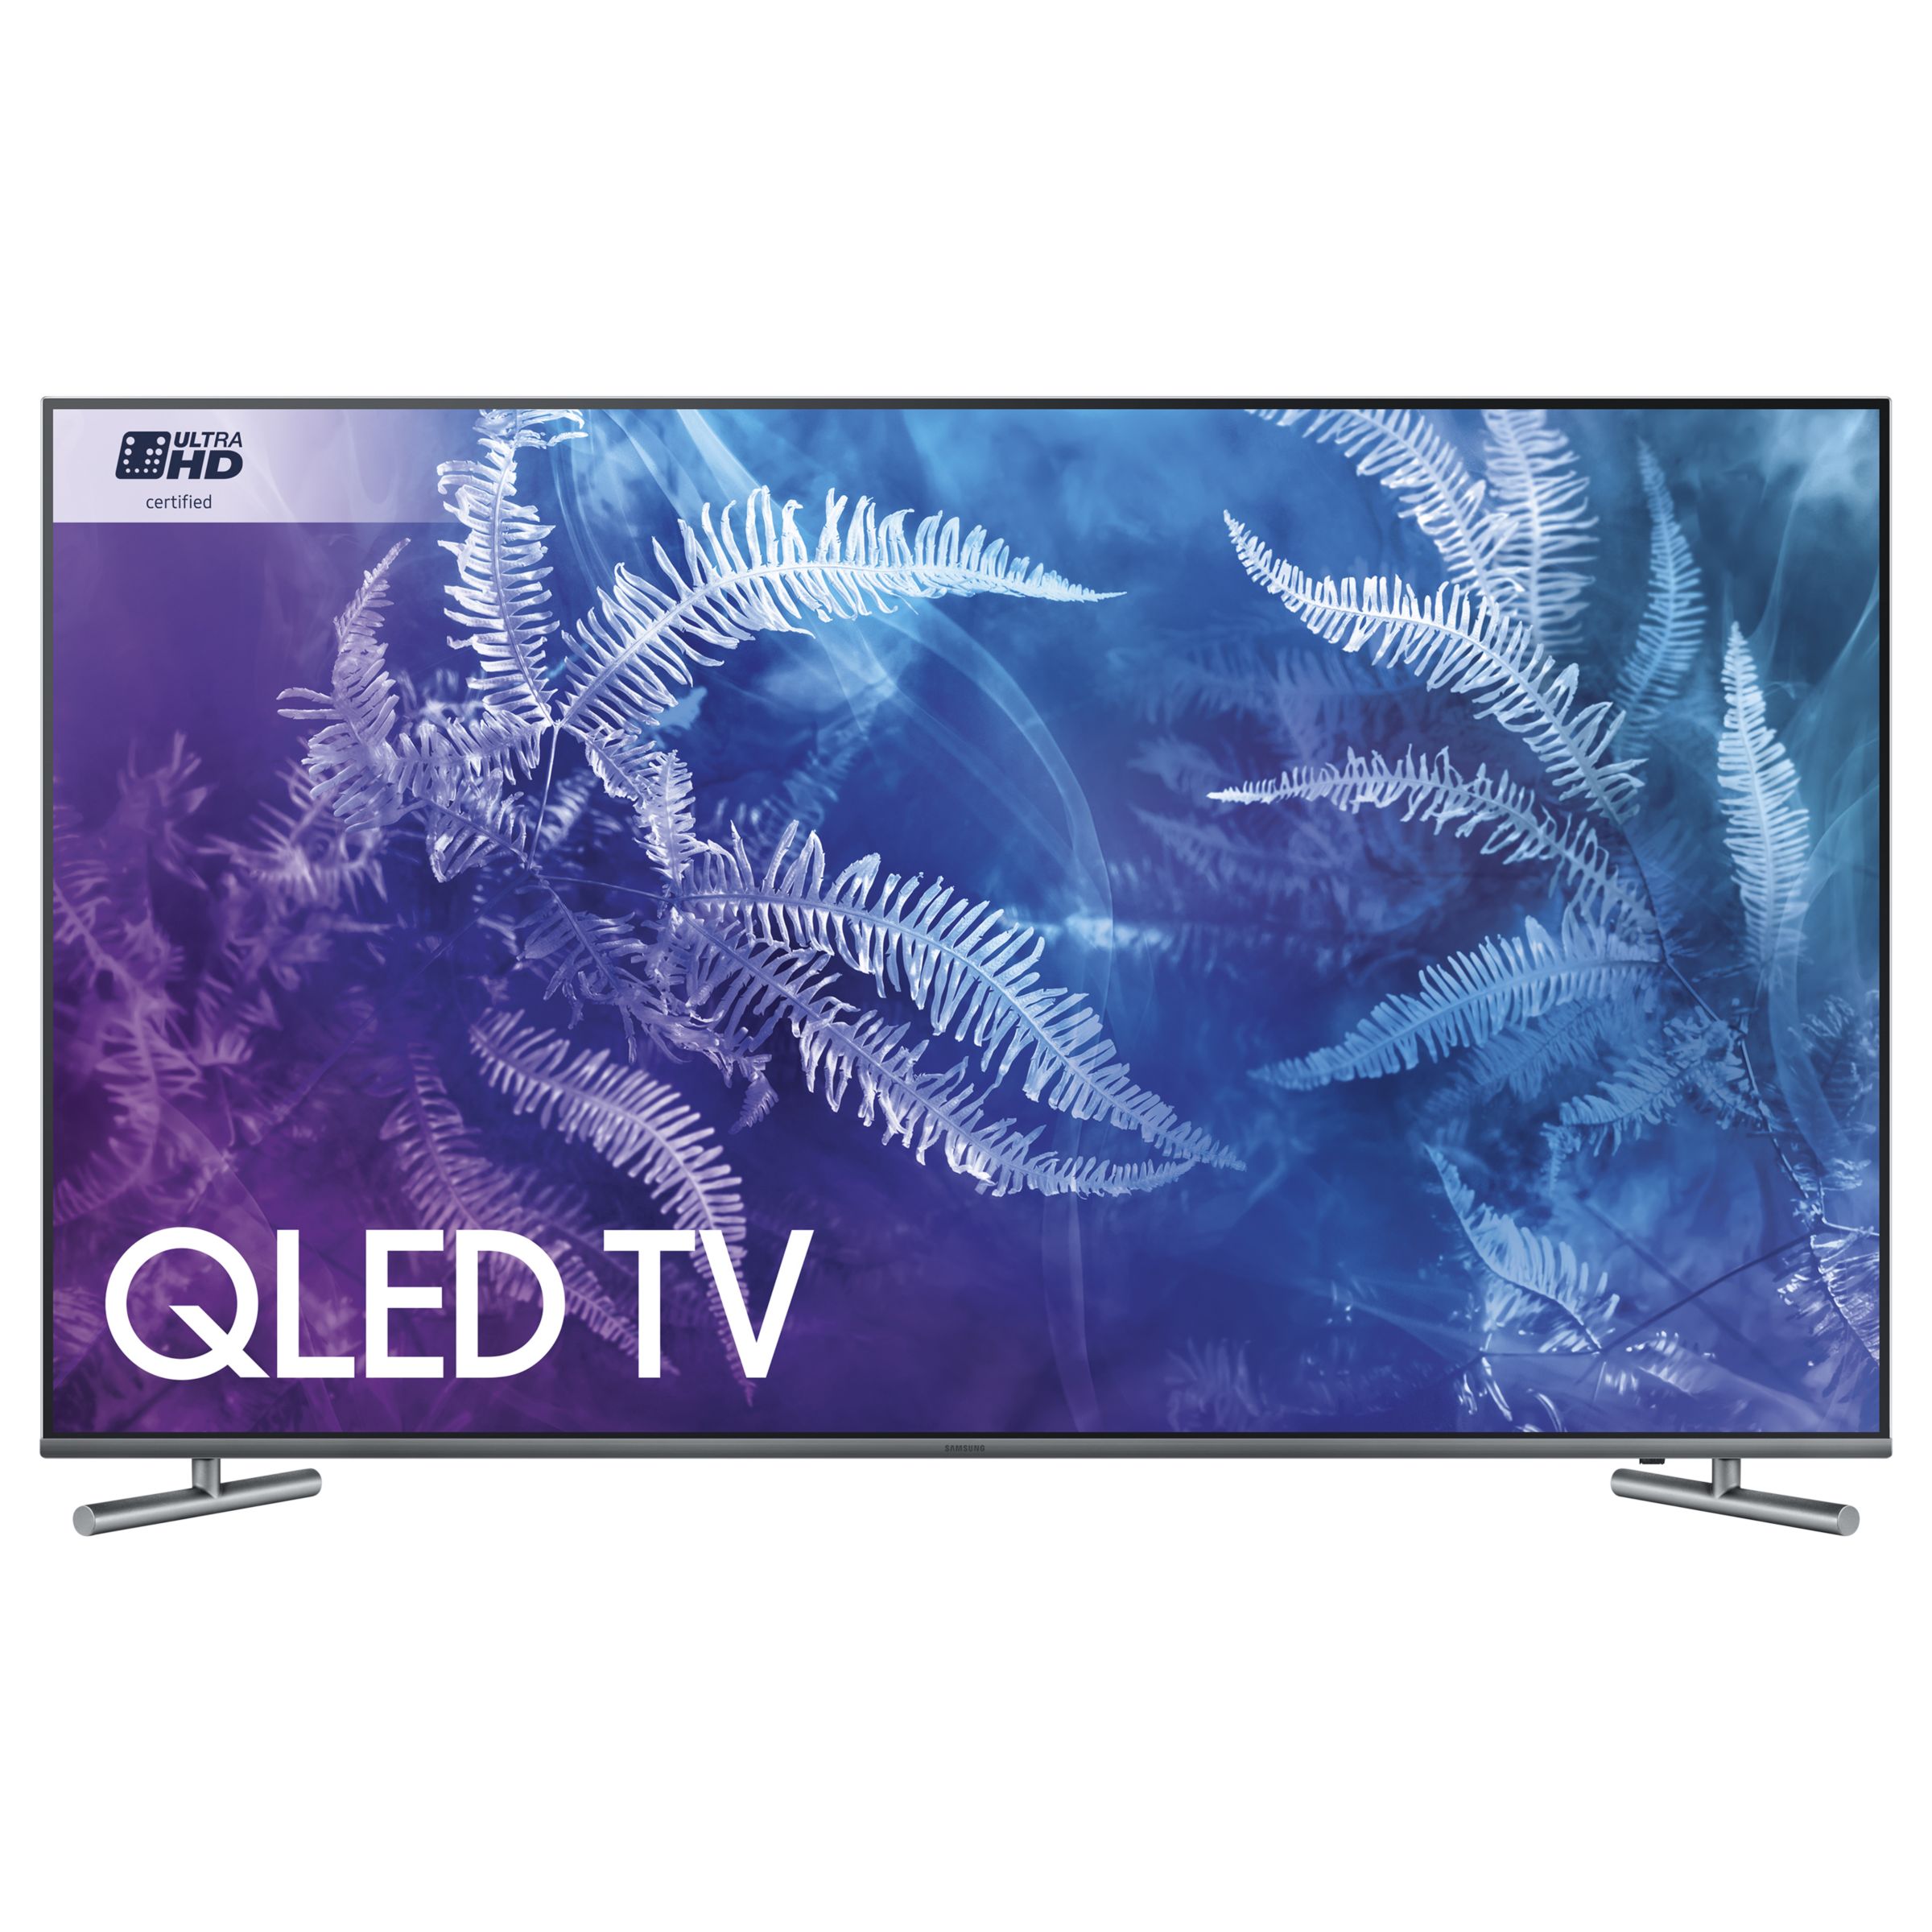 Samsung QE65Q6F QLED HDR 1000 4K Ultra HD Smart TV, 65" with TVPlus/Freesat HD & 360 Design, Ultra HD Certified, Silver